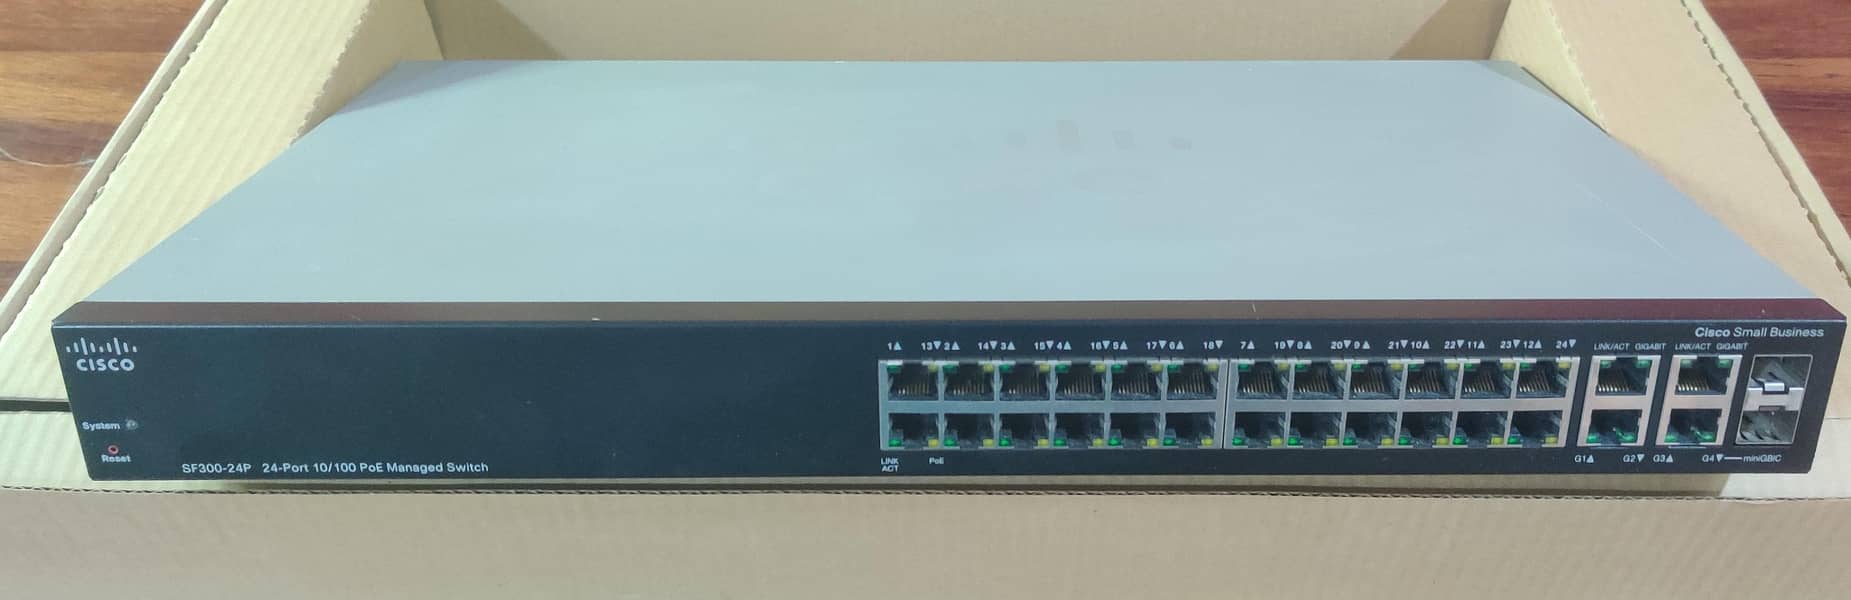 Cisco SF-300- 24P 24-port 10/100 PoE Managed Gigabit Switch (Open Box) 4